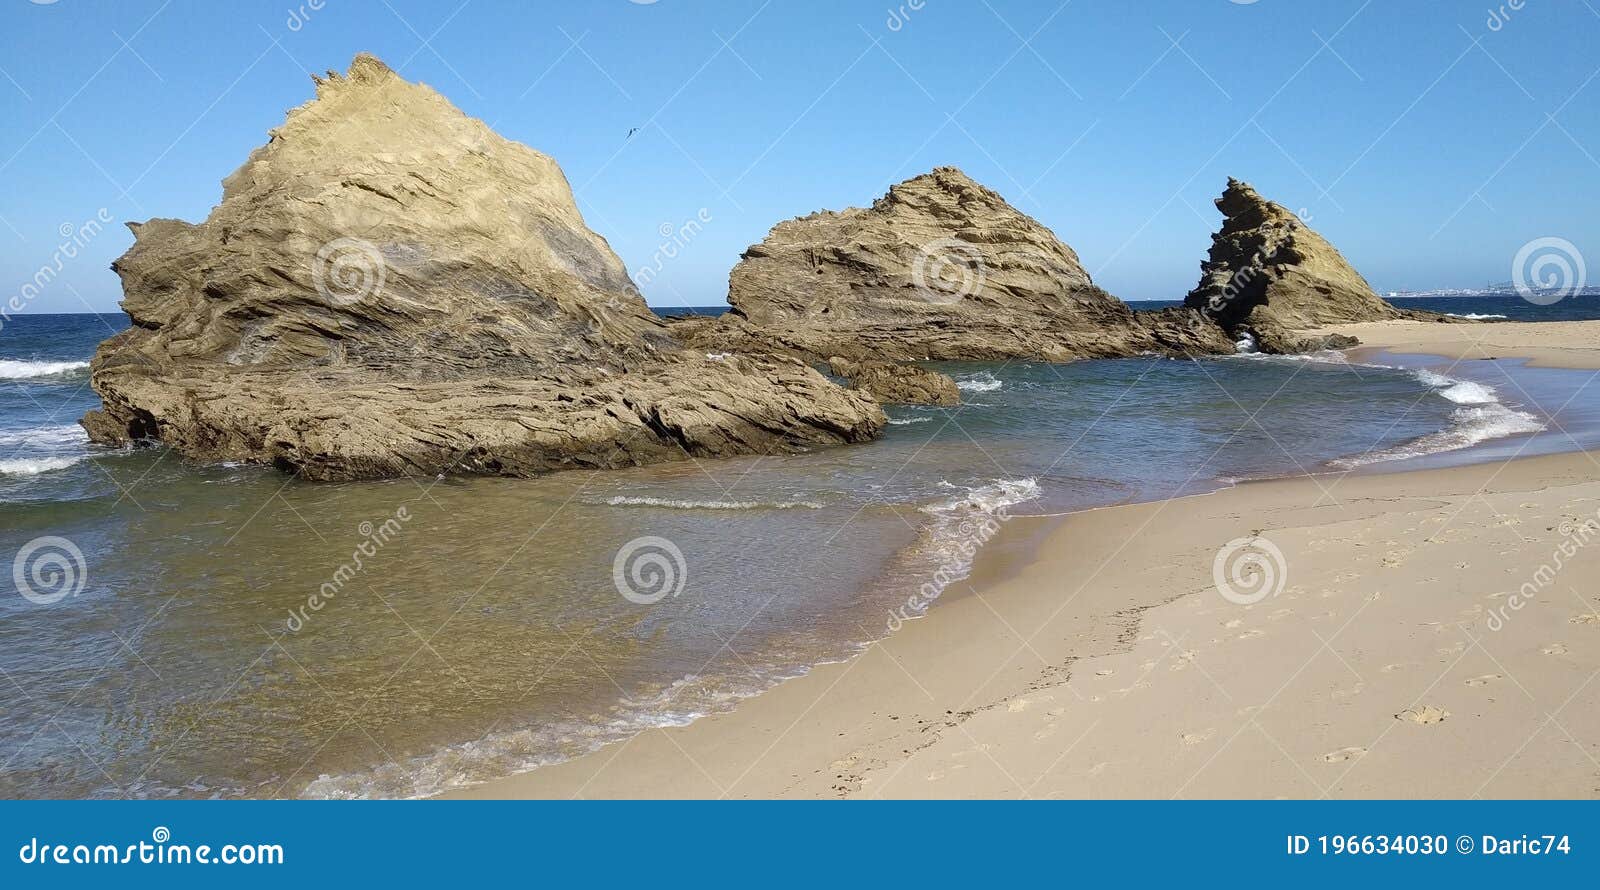 praia da samoqueira beach, sines, porto covo, portugal